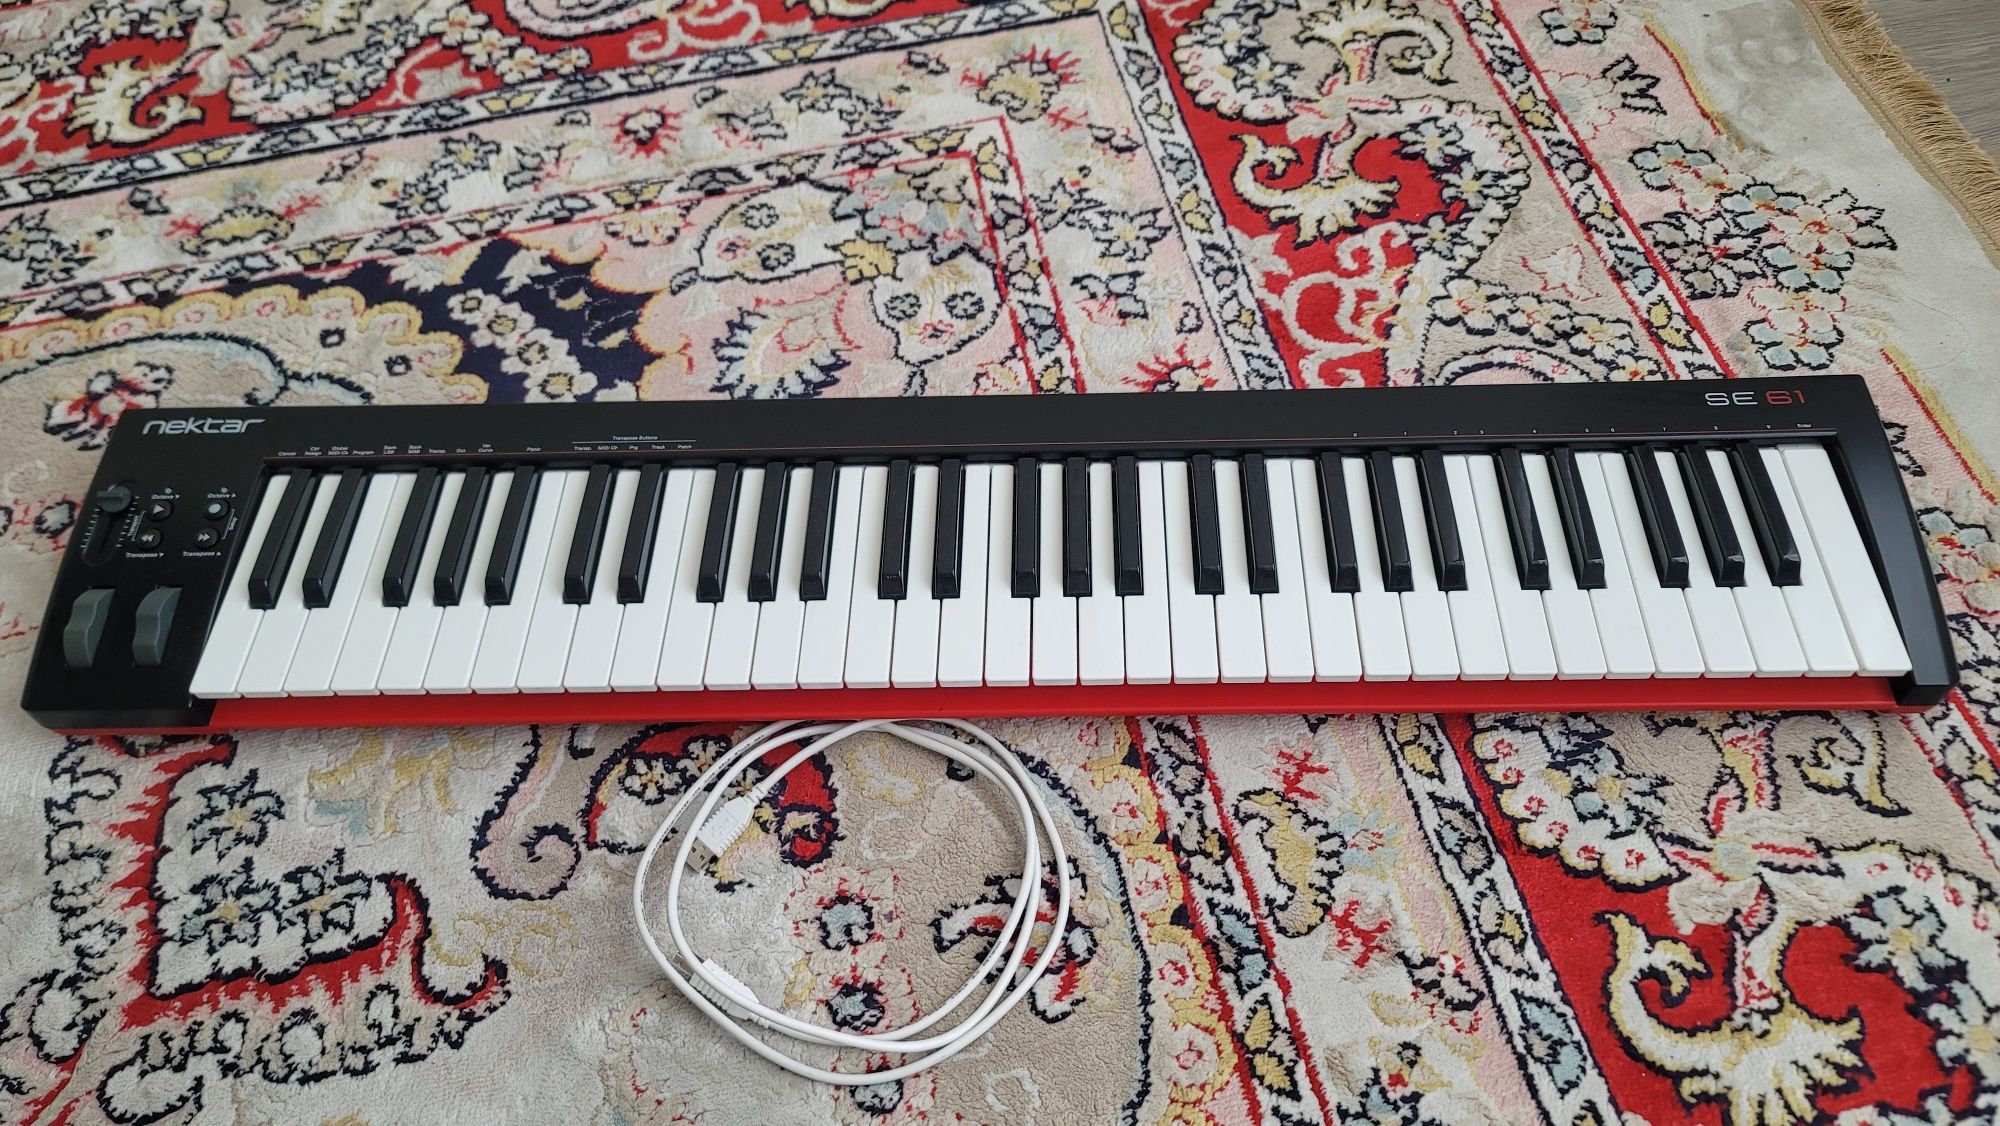 MIDI клавиатура Nektar SE61